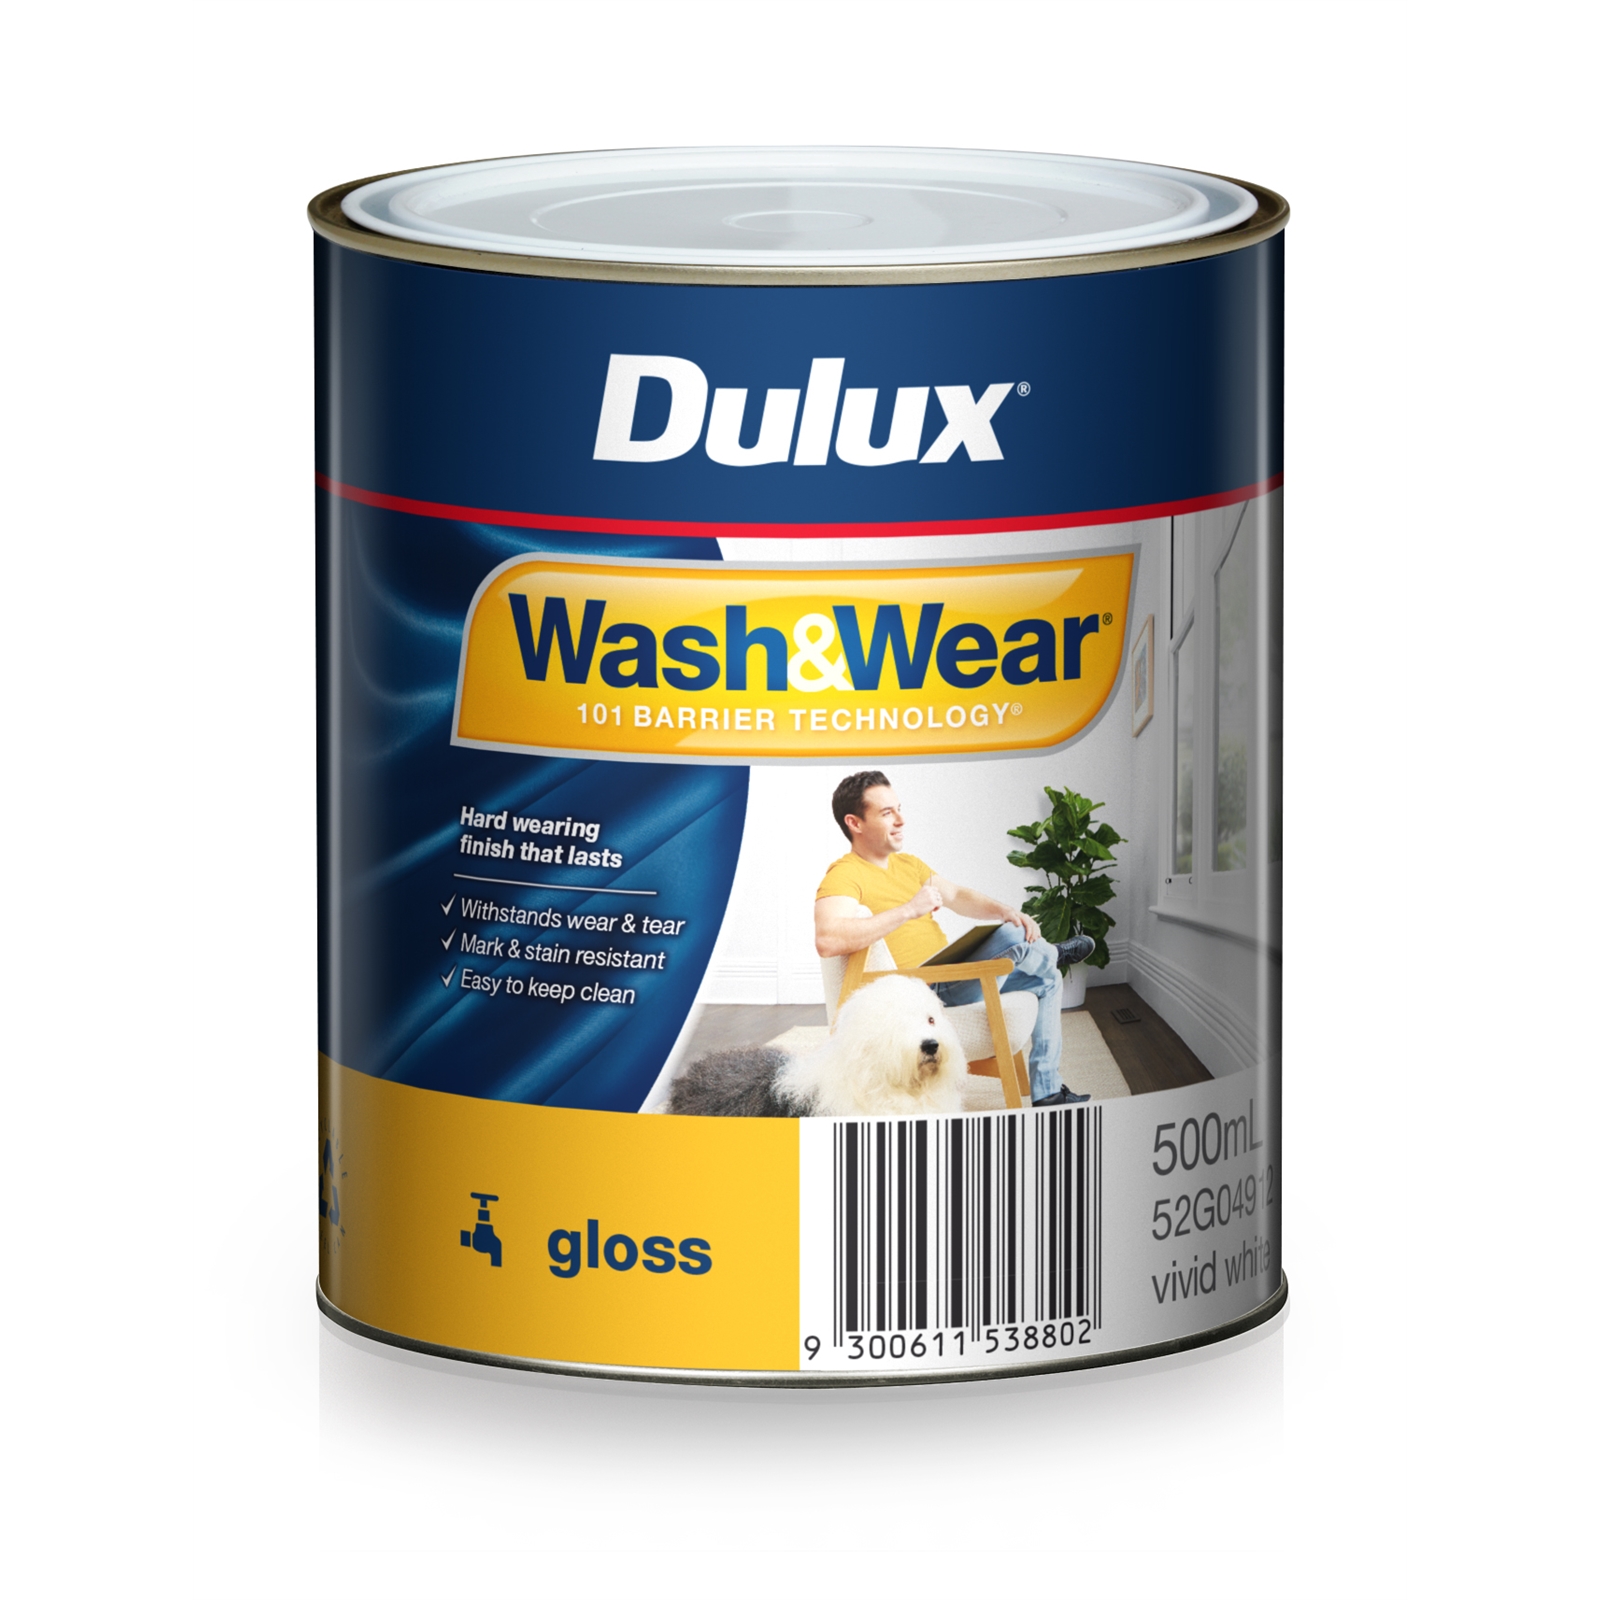 Dulux Wash&Wear 500ml Vivid White Gloss Paint